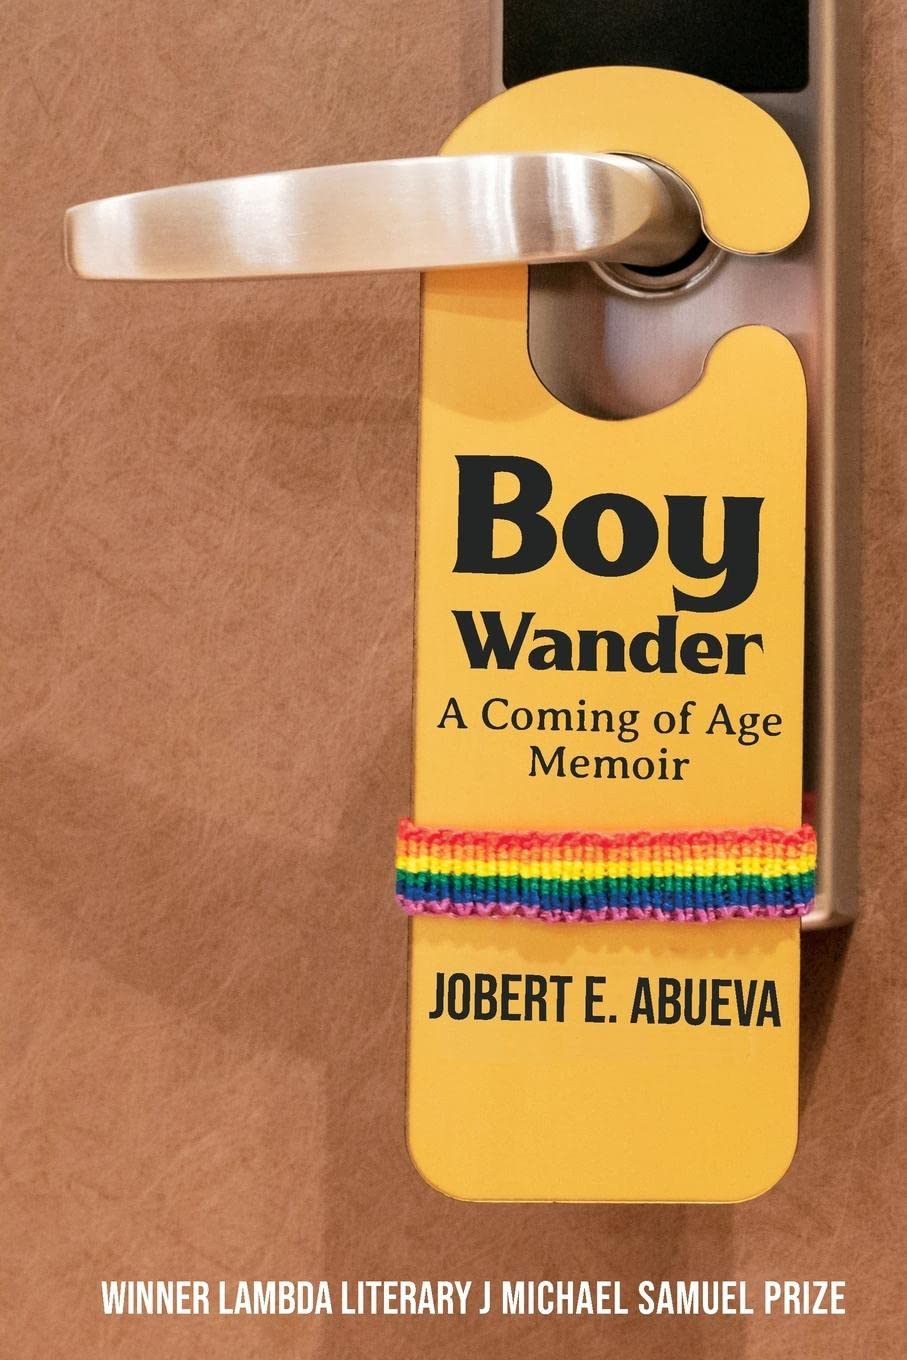 Book Review: Boy Wander – A Coming of Age Memoir